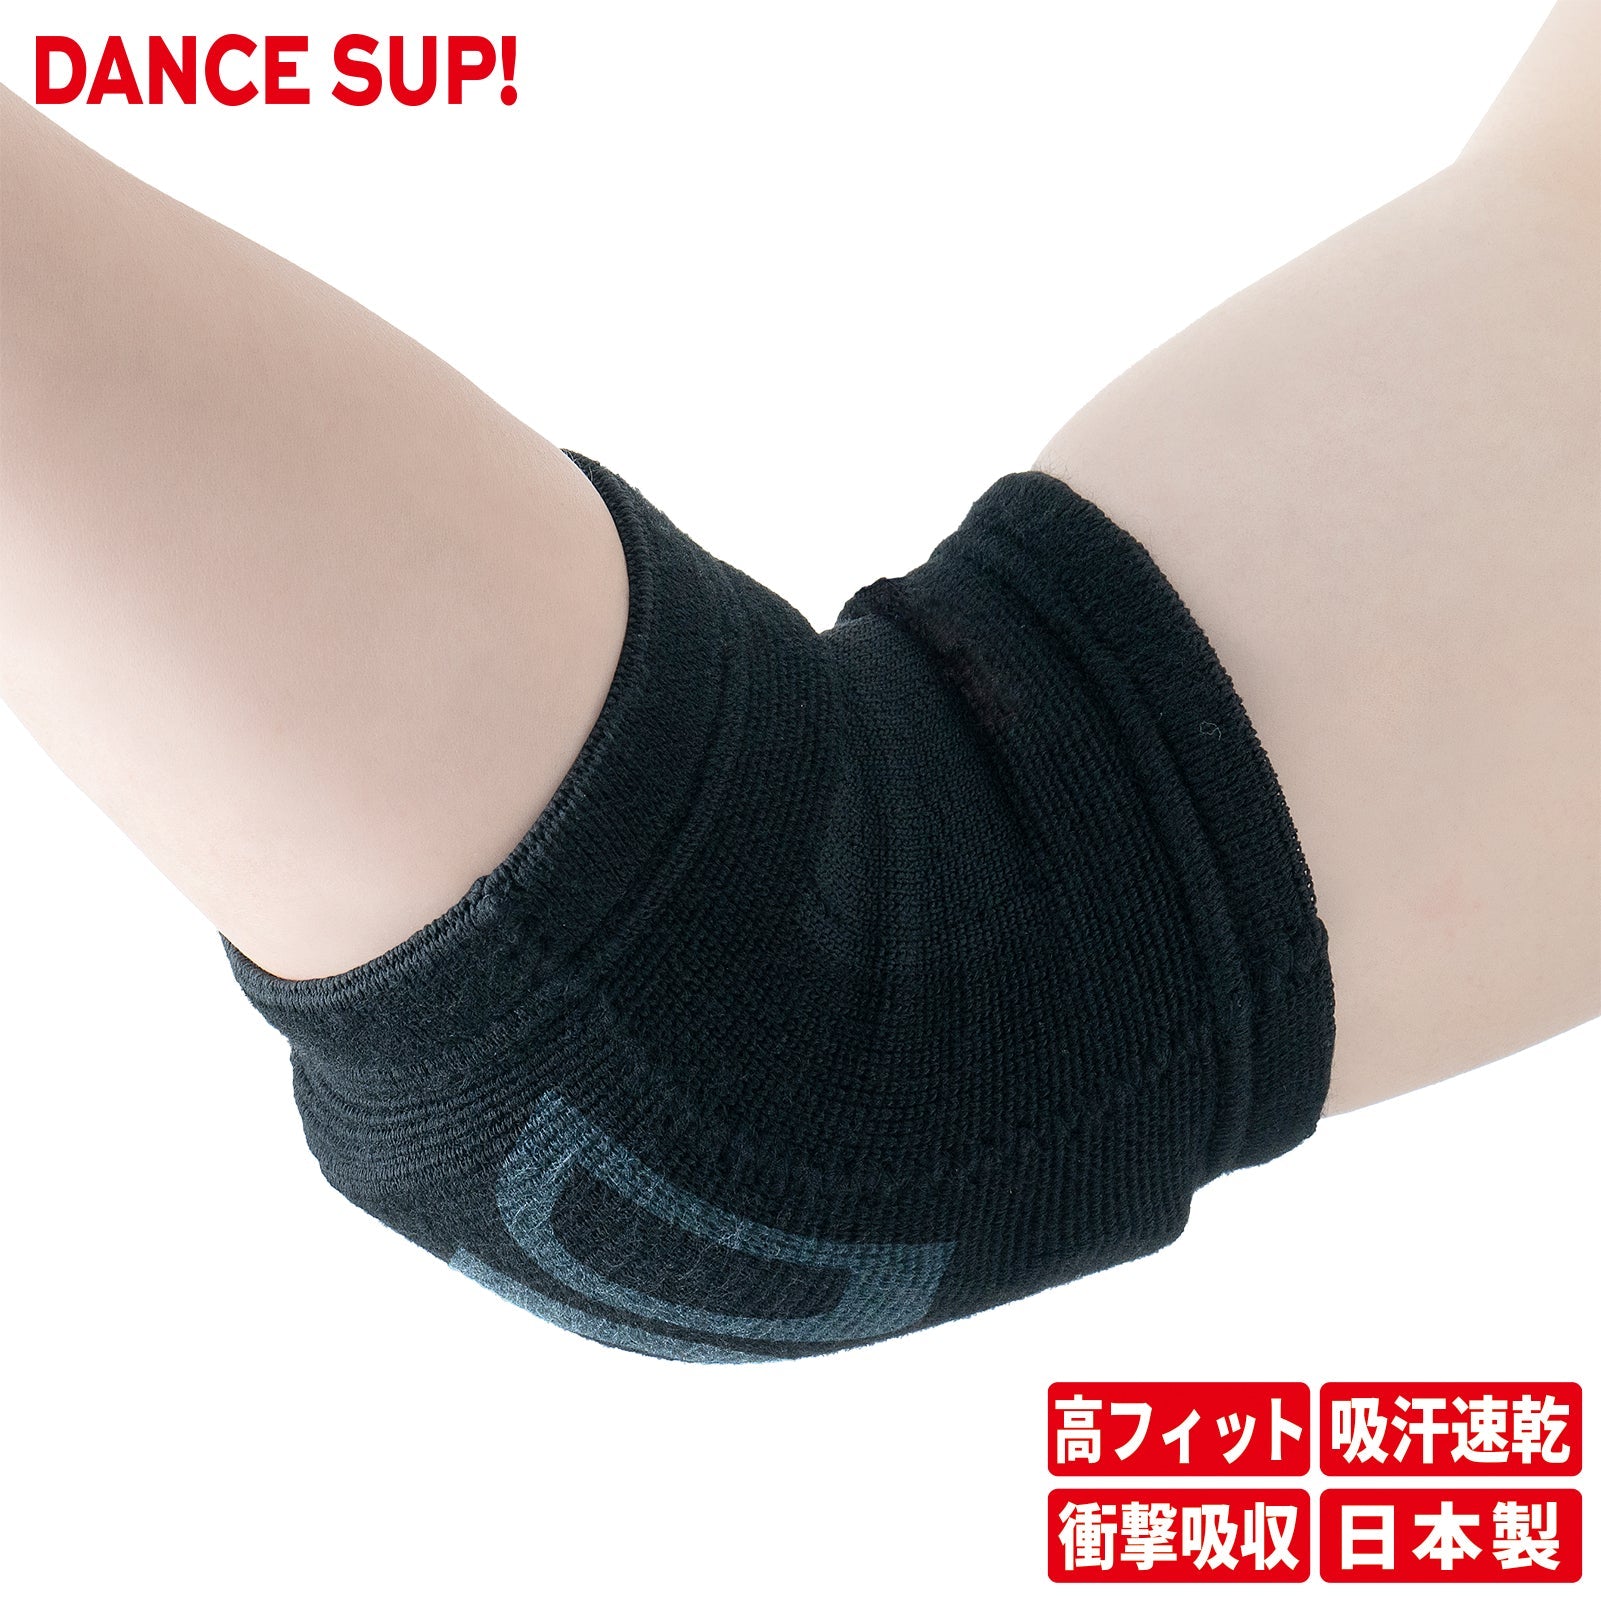 【DANCE SUP!】肘サポーター 肘用 ダンス用 8mm厚 パッド付き ダンスサップ 黒 ブラック 左右兼用 1個入 日本製 #SUP-767